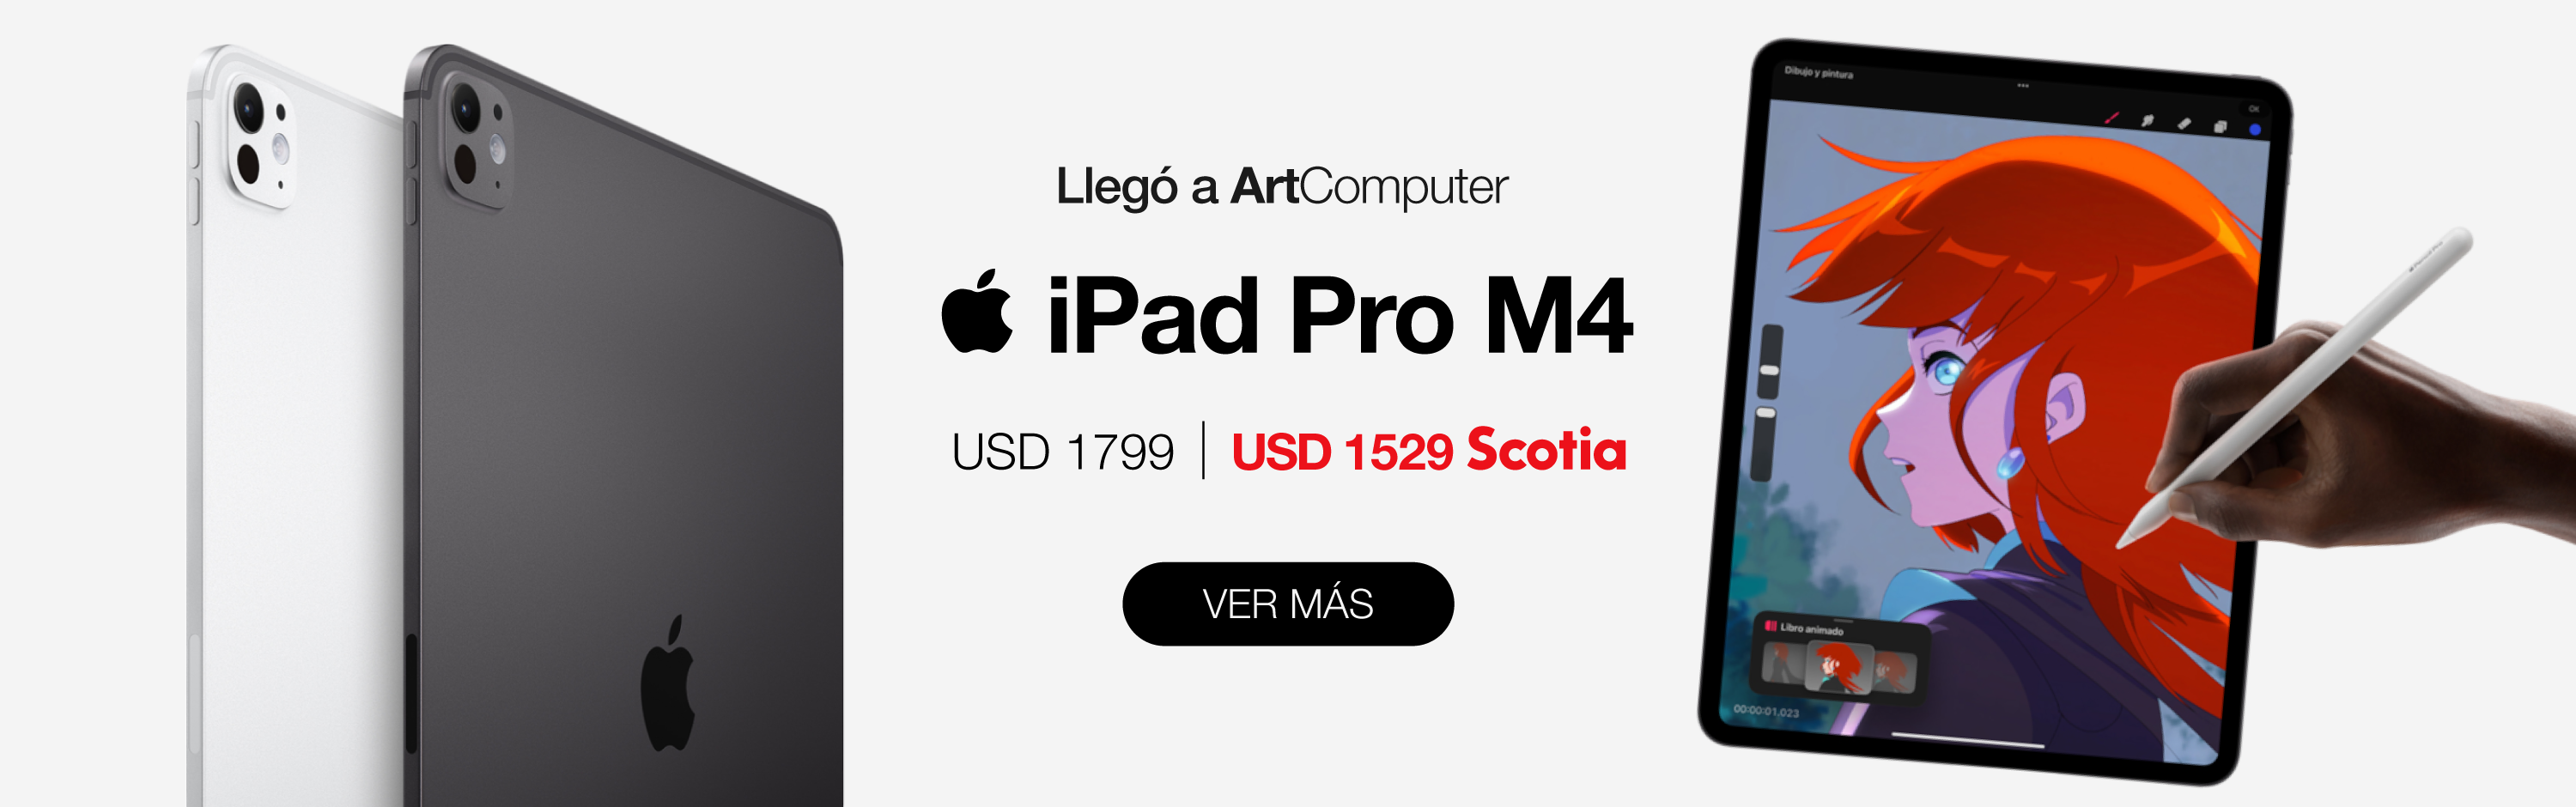 iPad pro m4